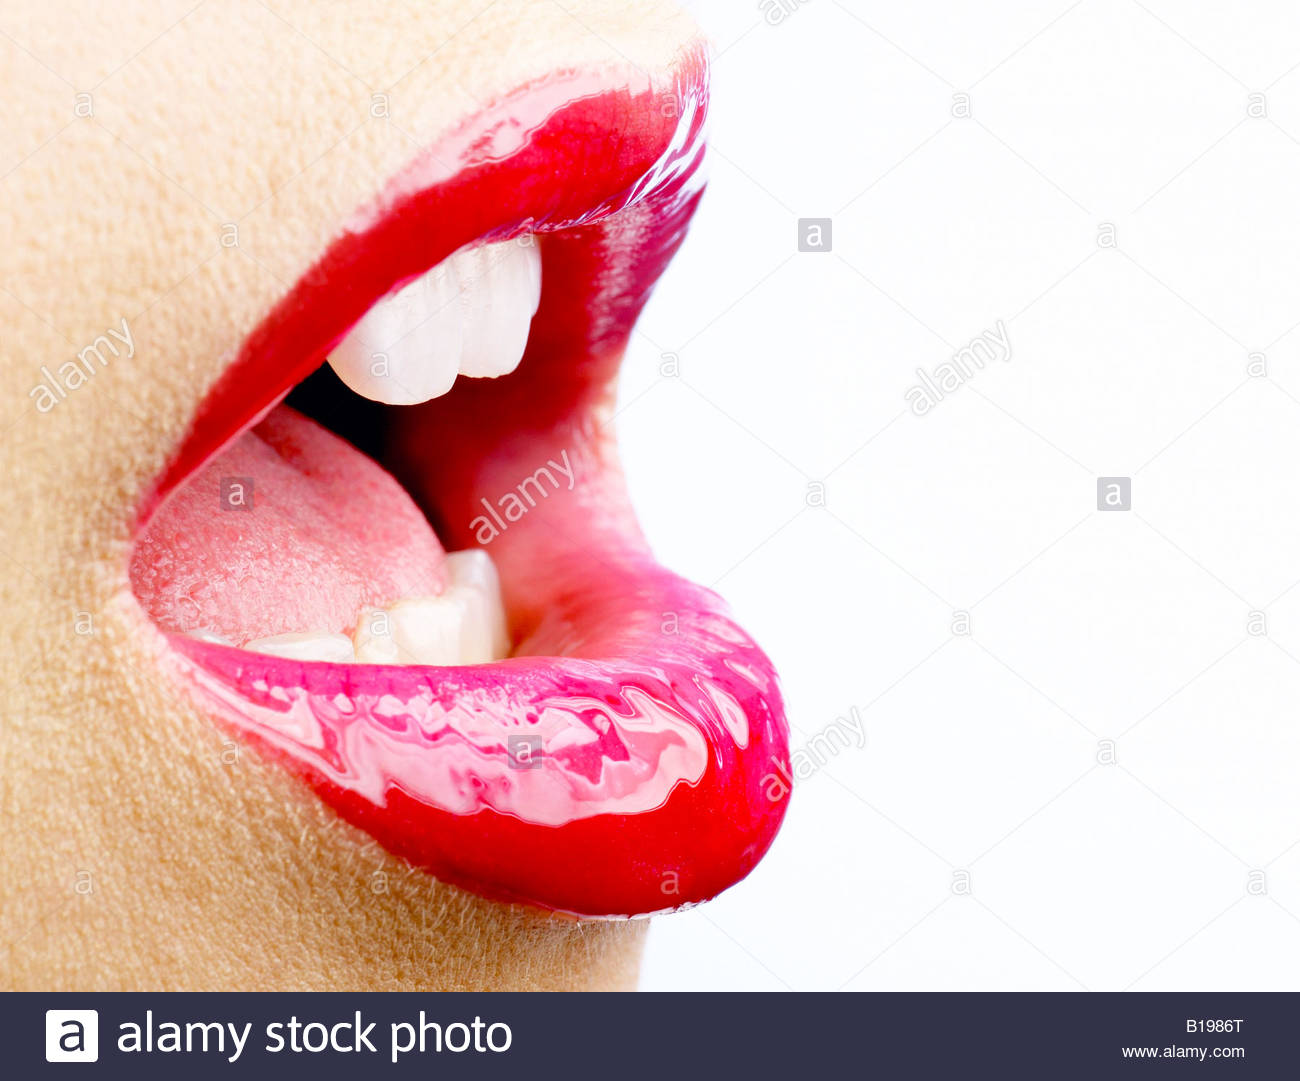 cerca de un 26 anos labios lapiz labial rojo montreal quebec canada b1986t